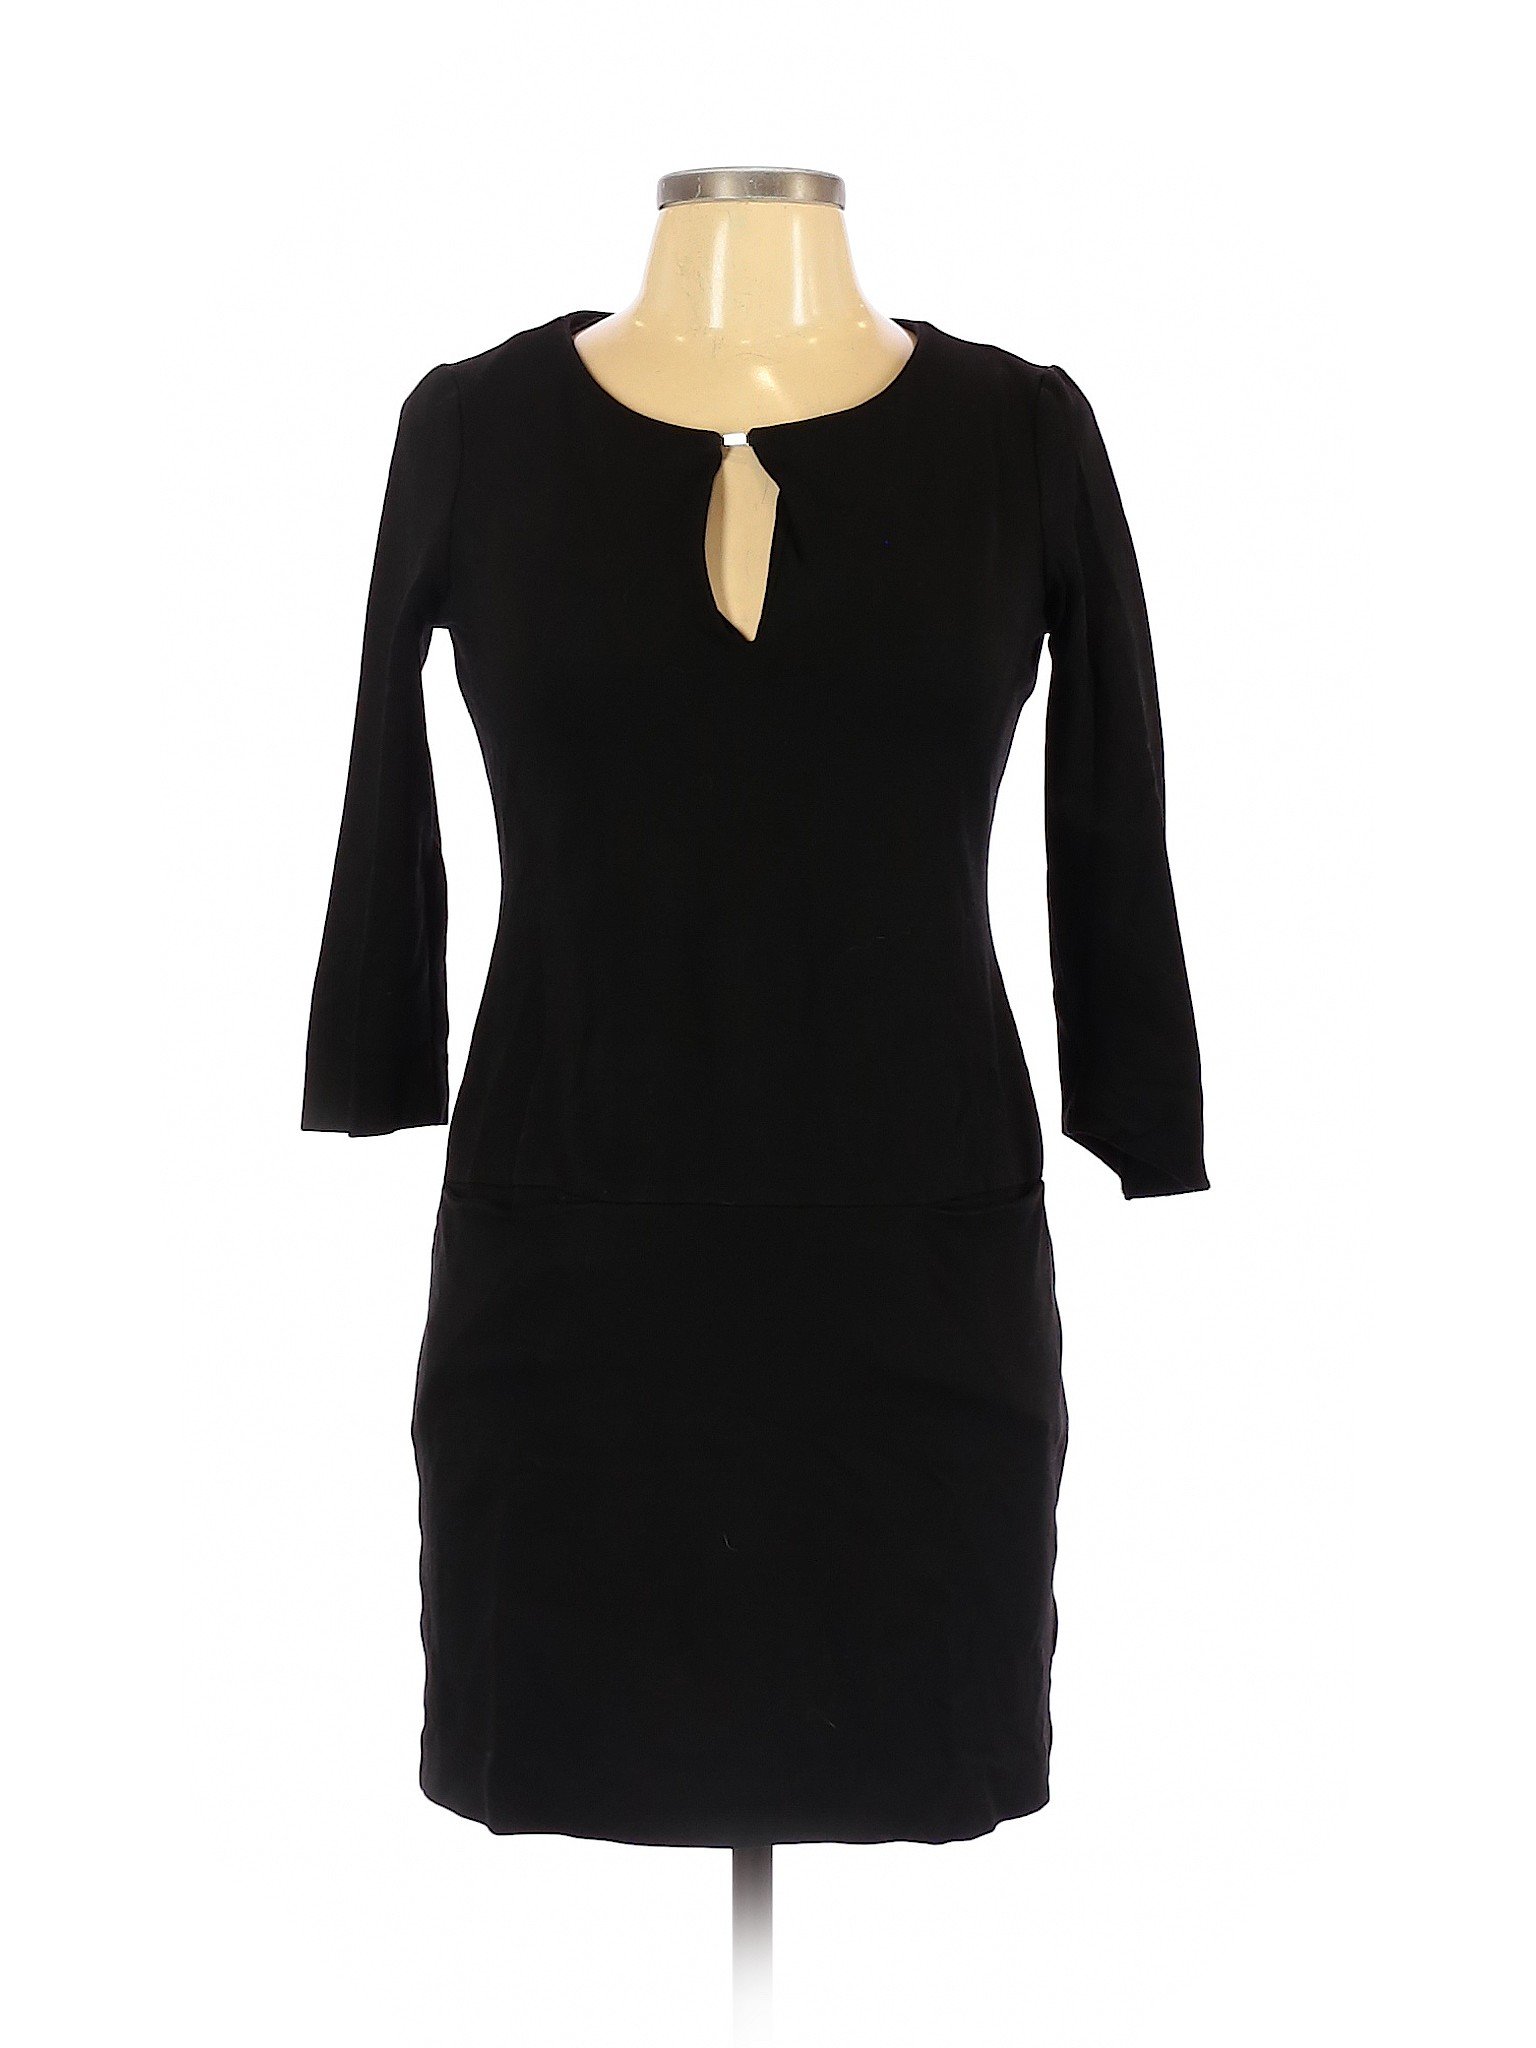 Juicy Couture Women Black Casual Dress M | eBay